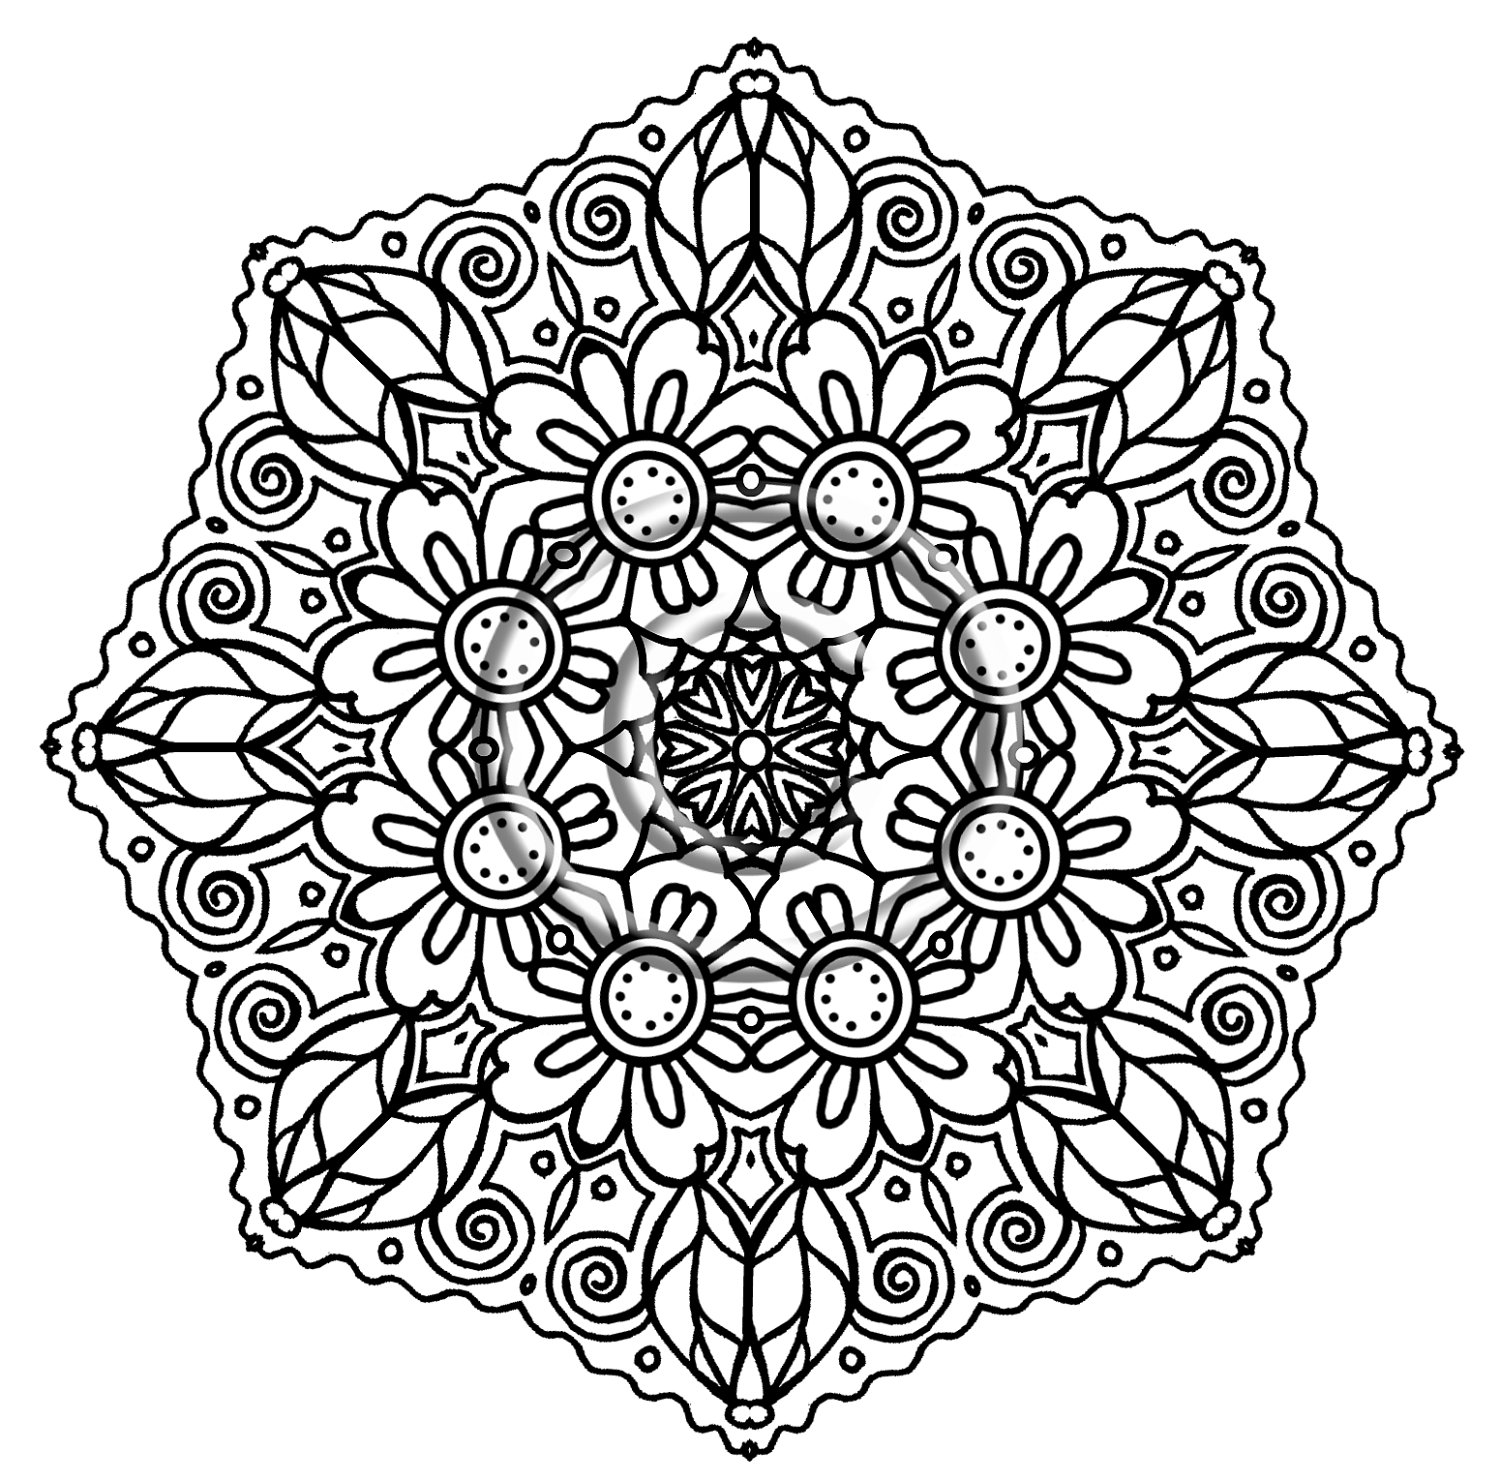 Intricate Mandala Coloring Pages at GetColorings.com ...